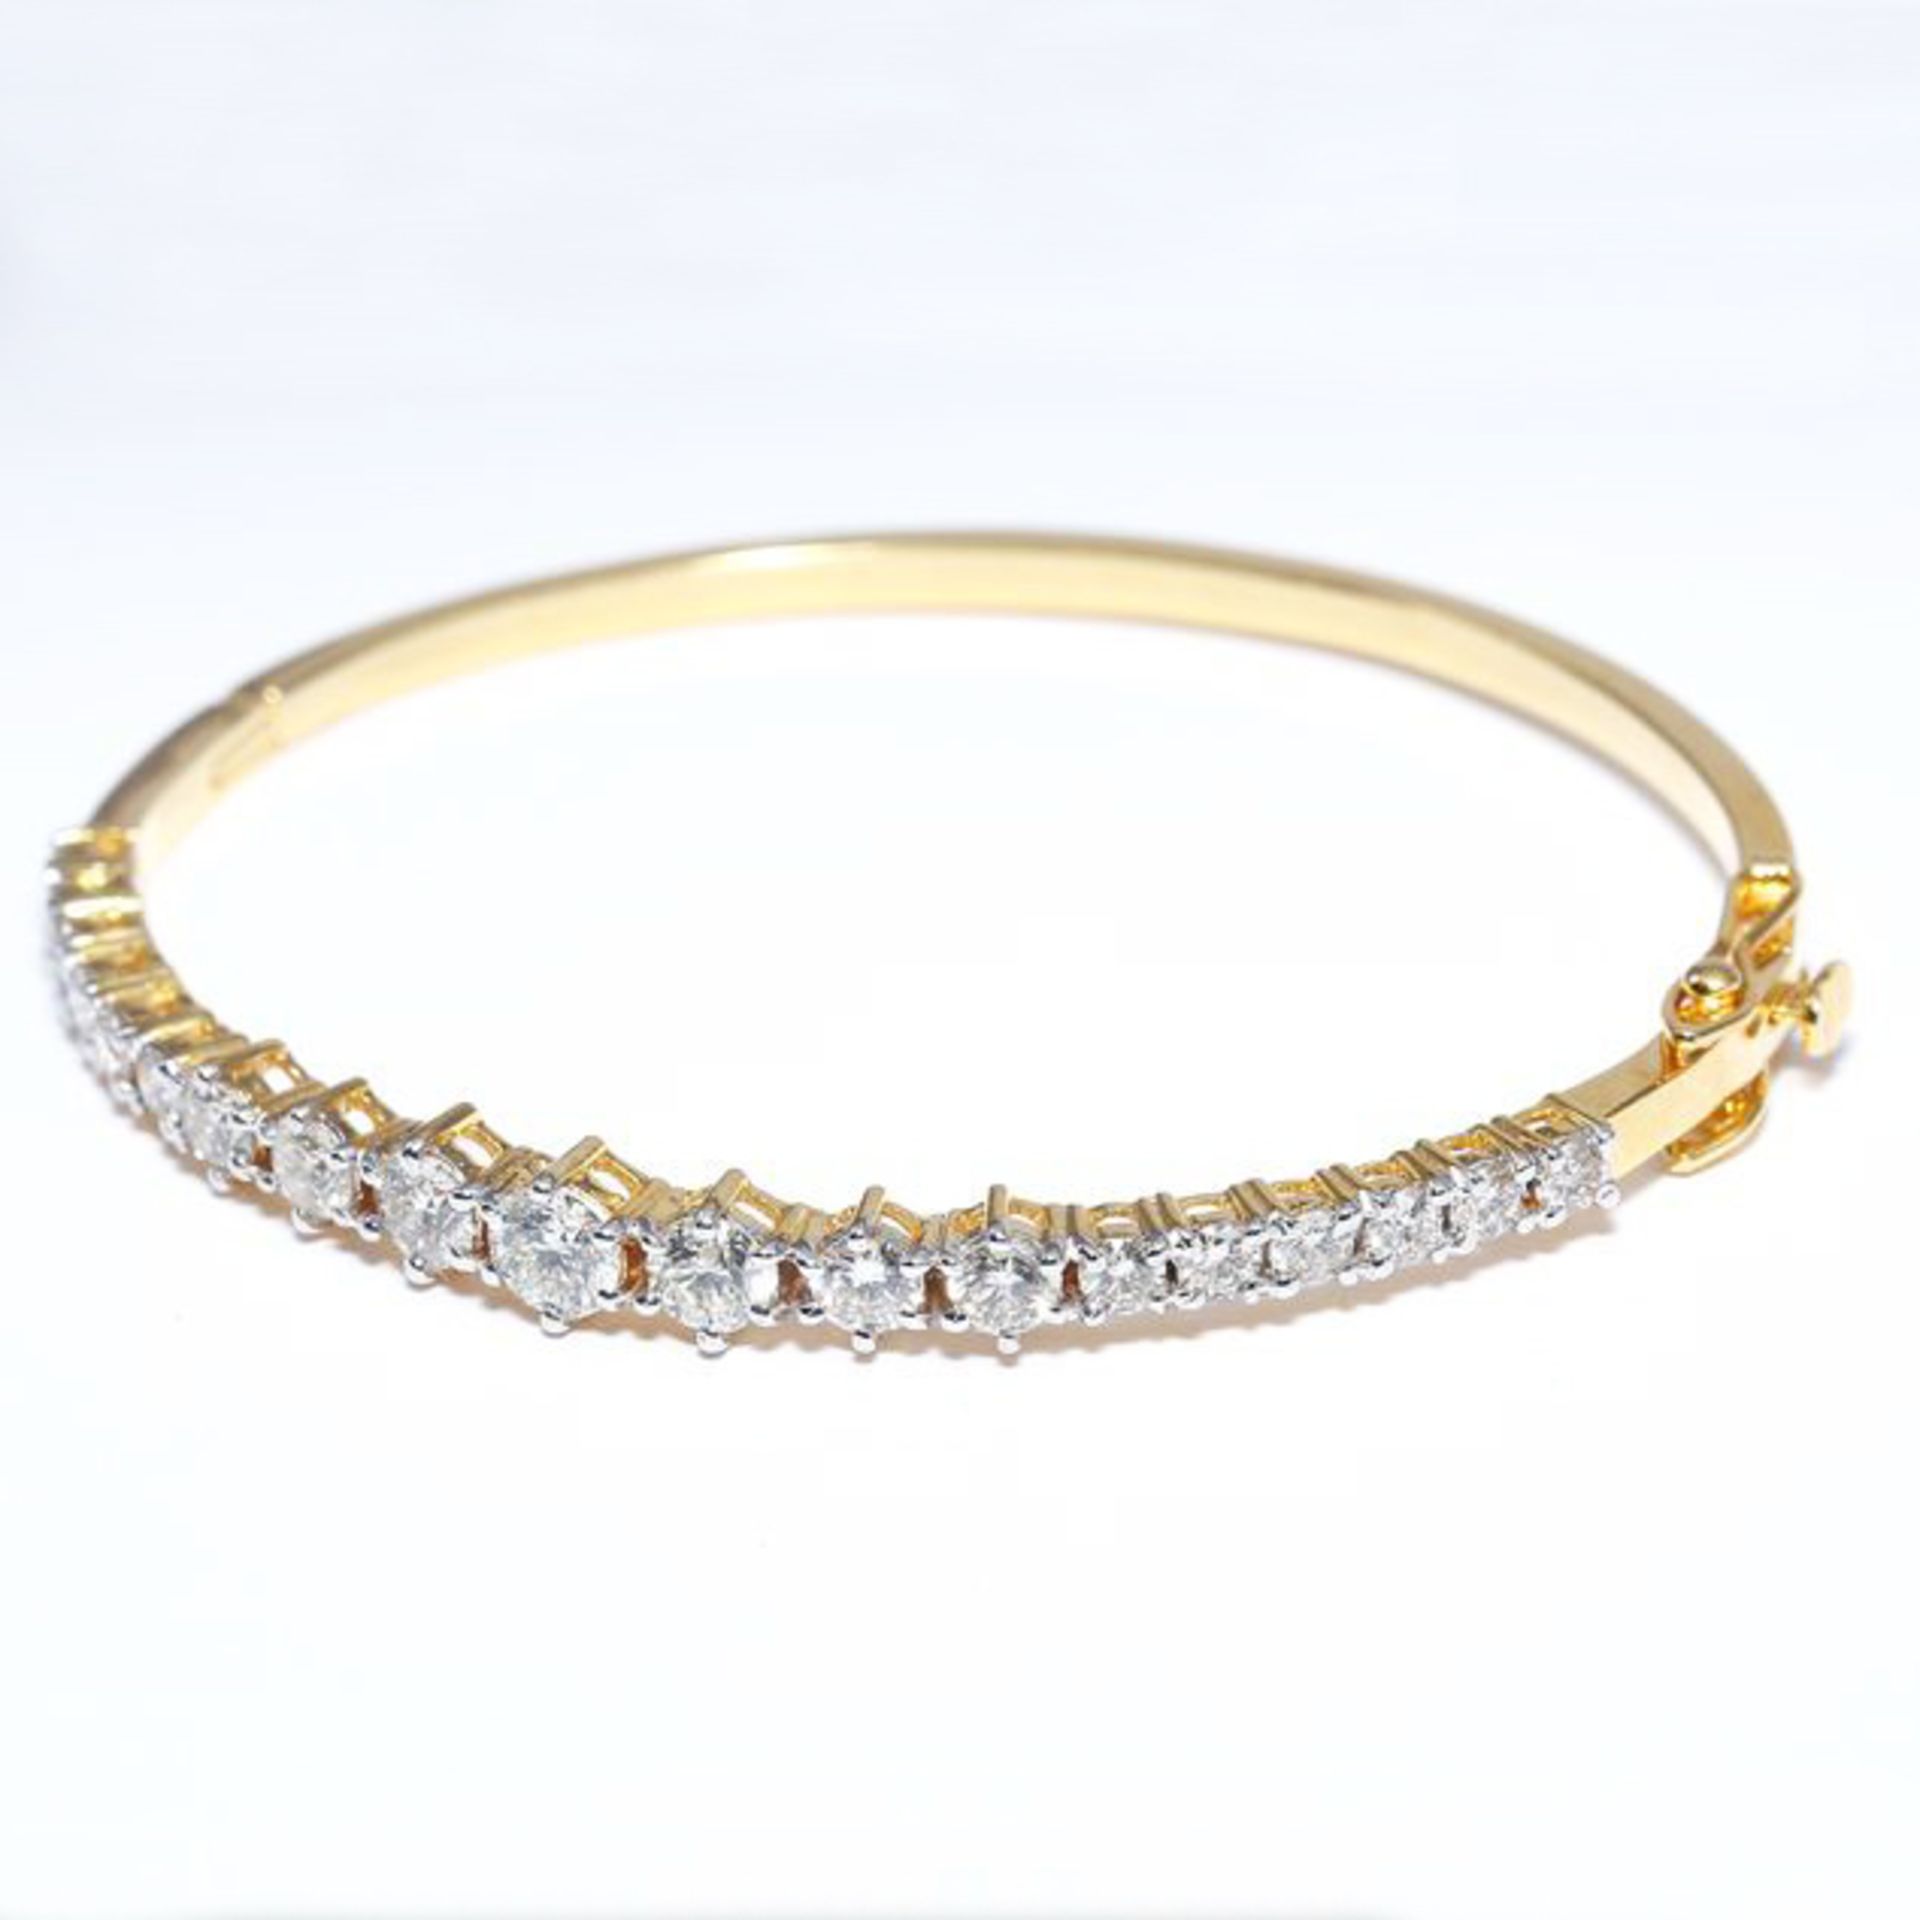 IGI Certified 14 K / 585 Yellow Gold Diamond Bracelet - Image 8 of 10